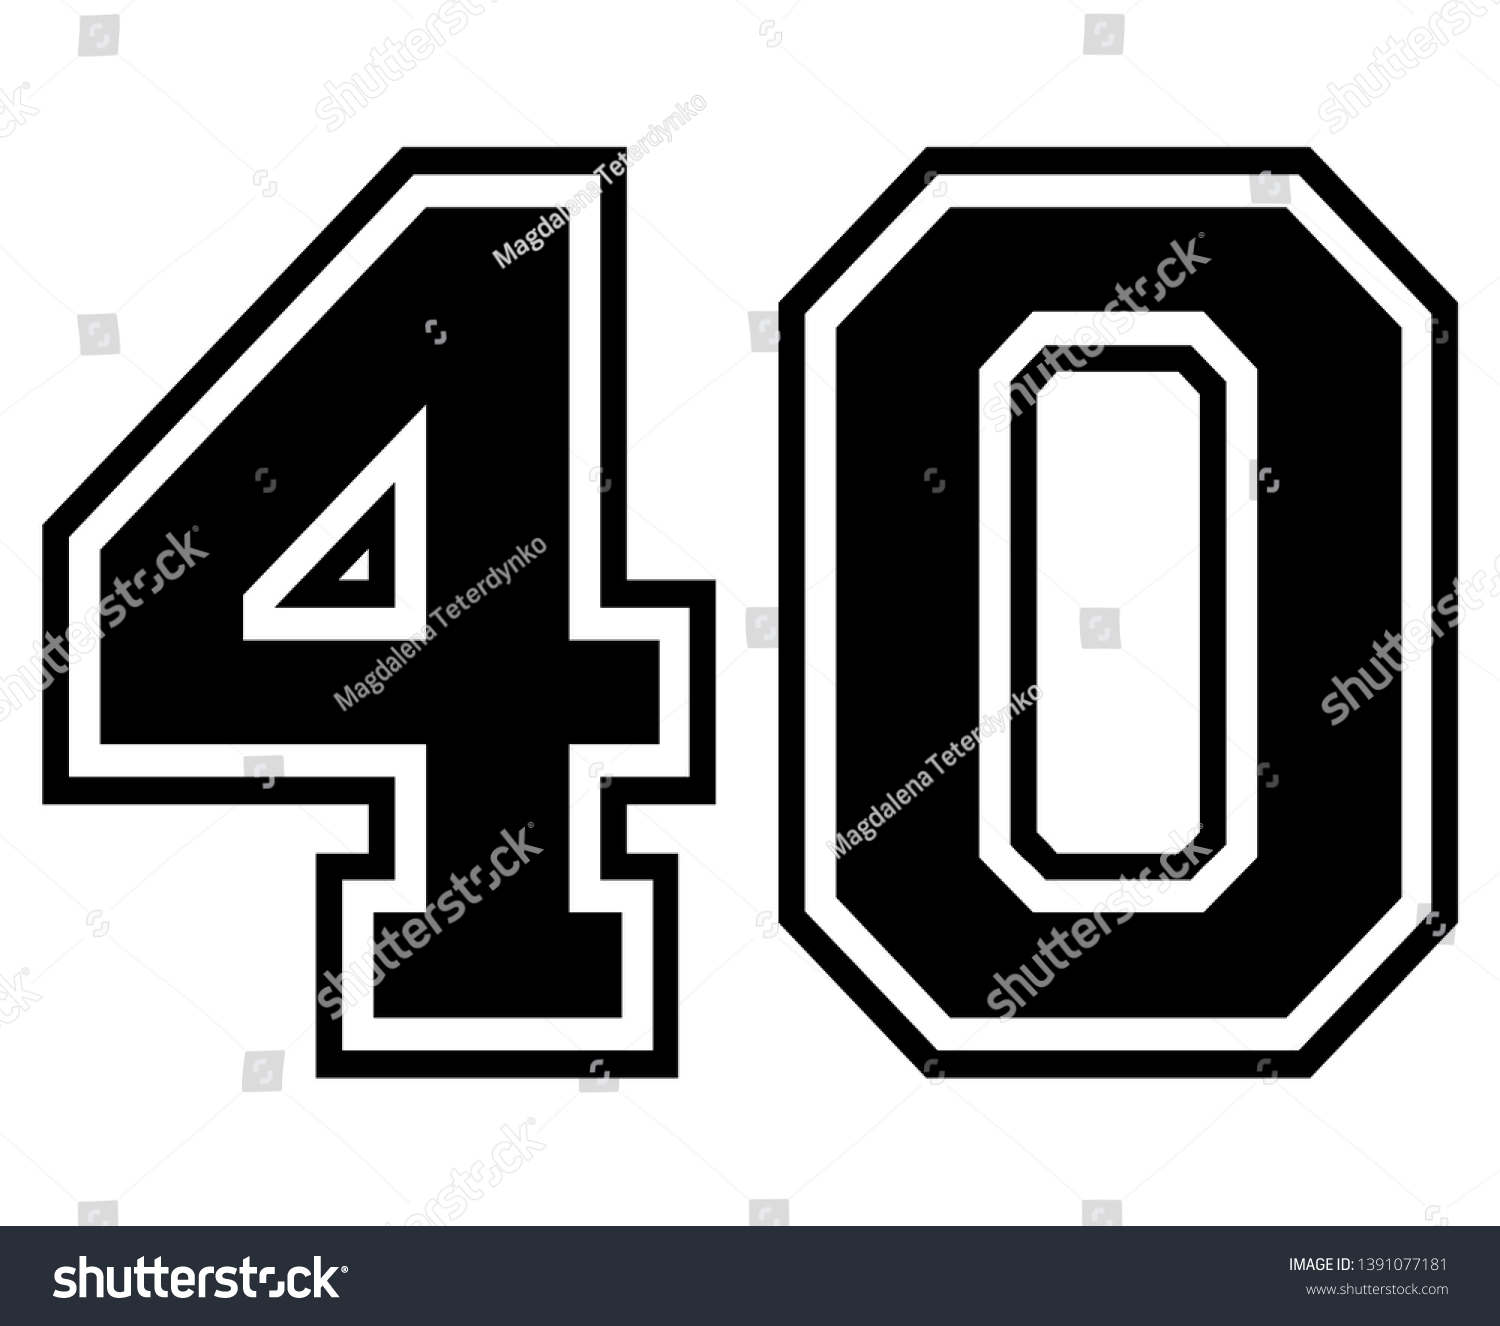 40 jersey